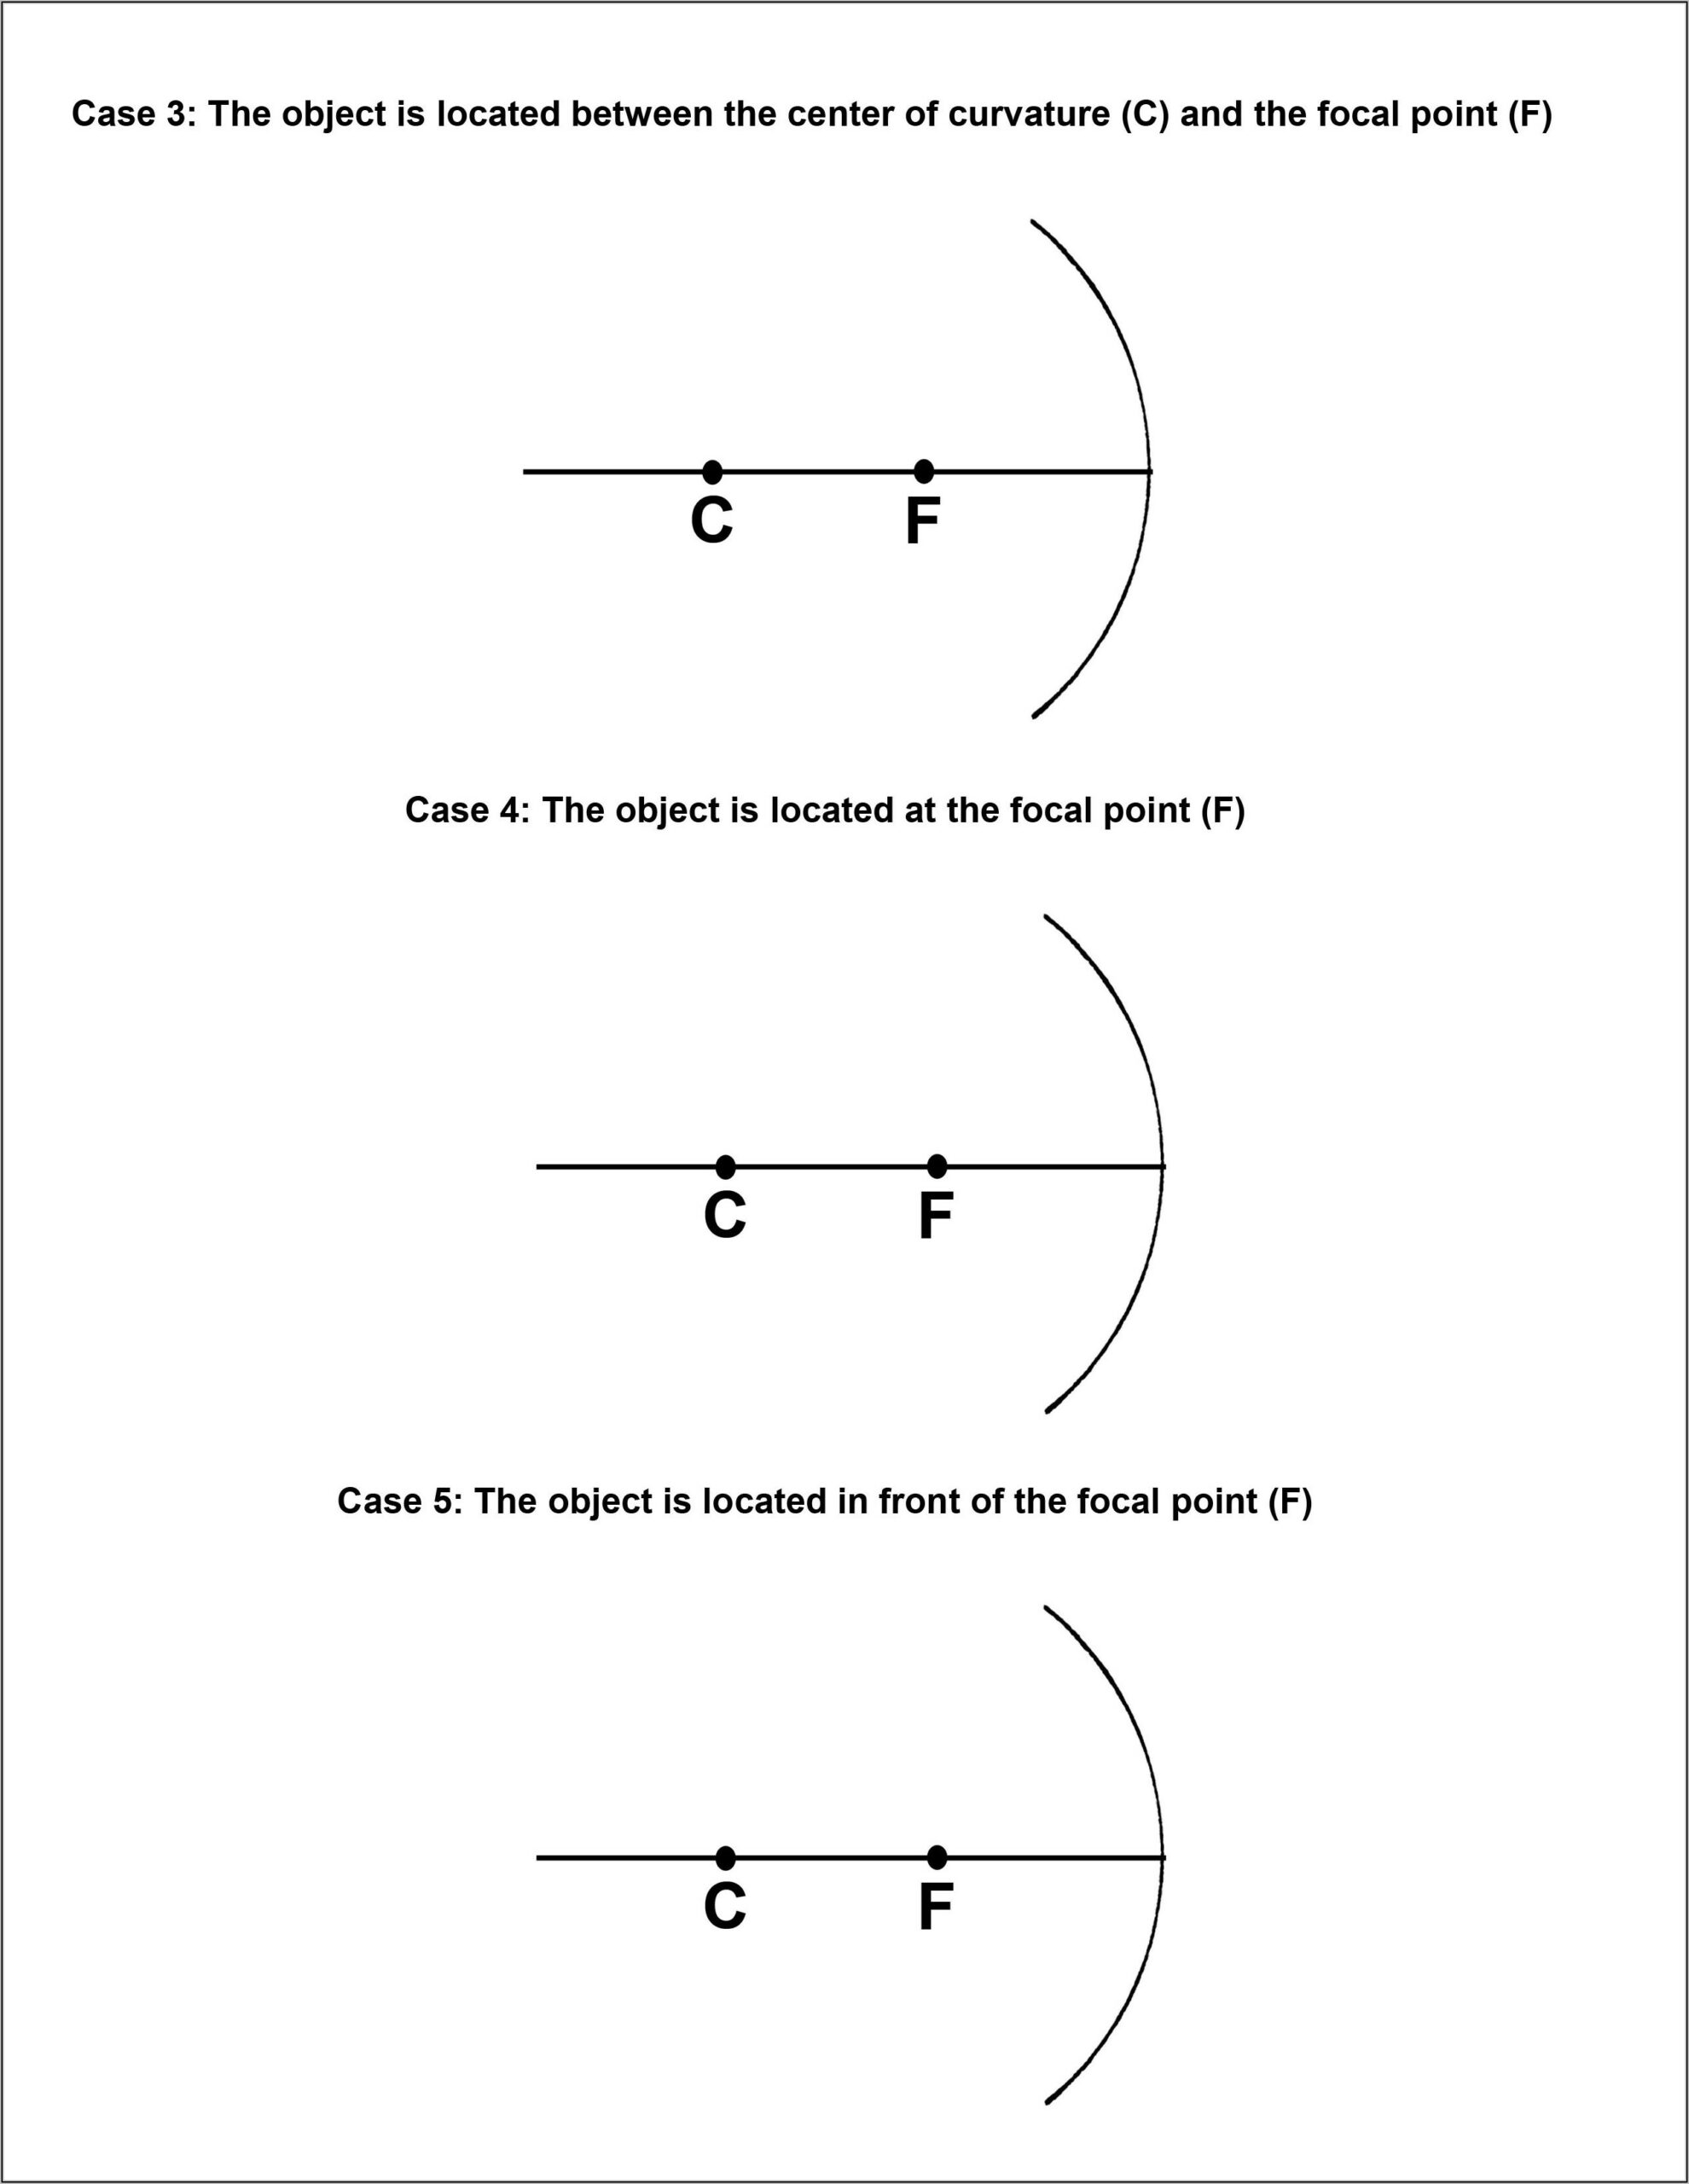 Convex Mirror Ray Diagram Worksheet